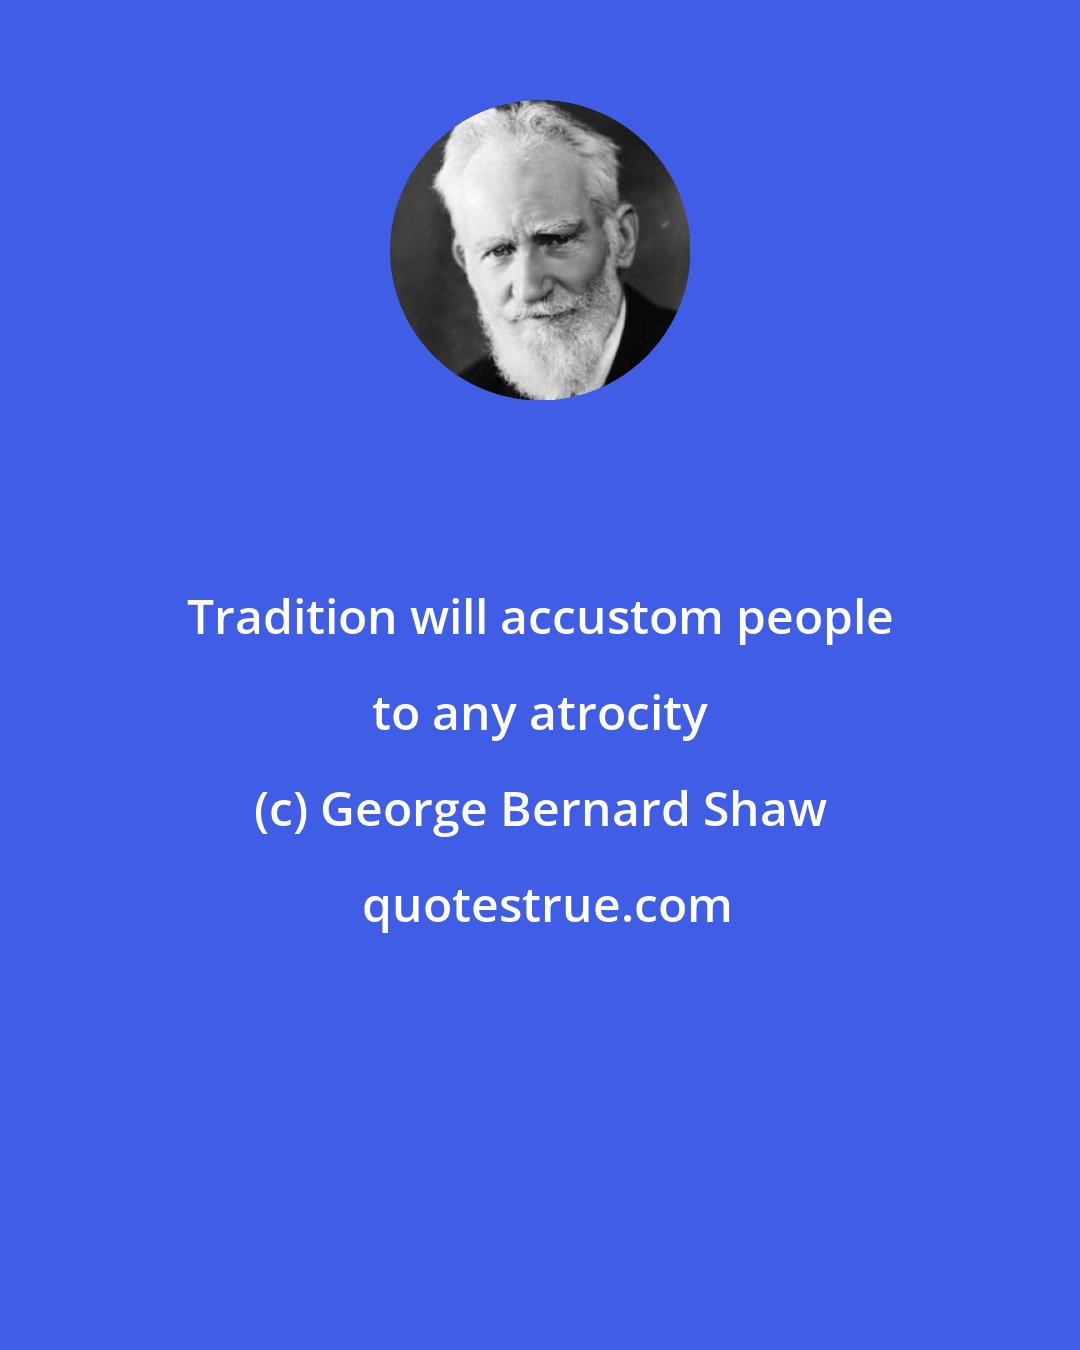 George Bernard Shaw: Tradition will accustom people to any atrocity